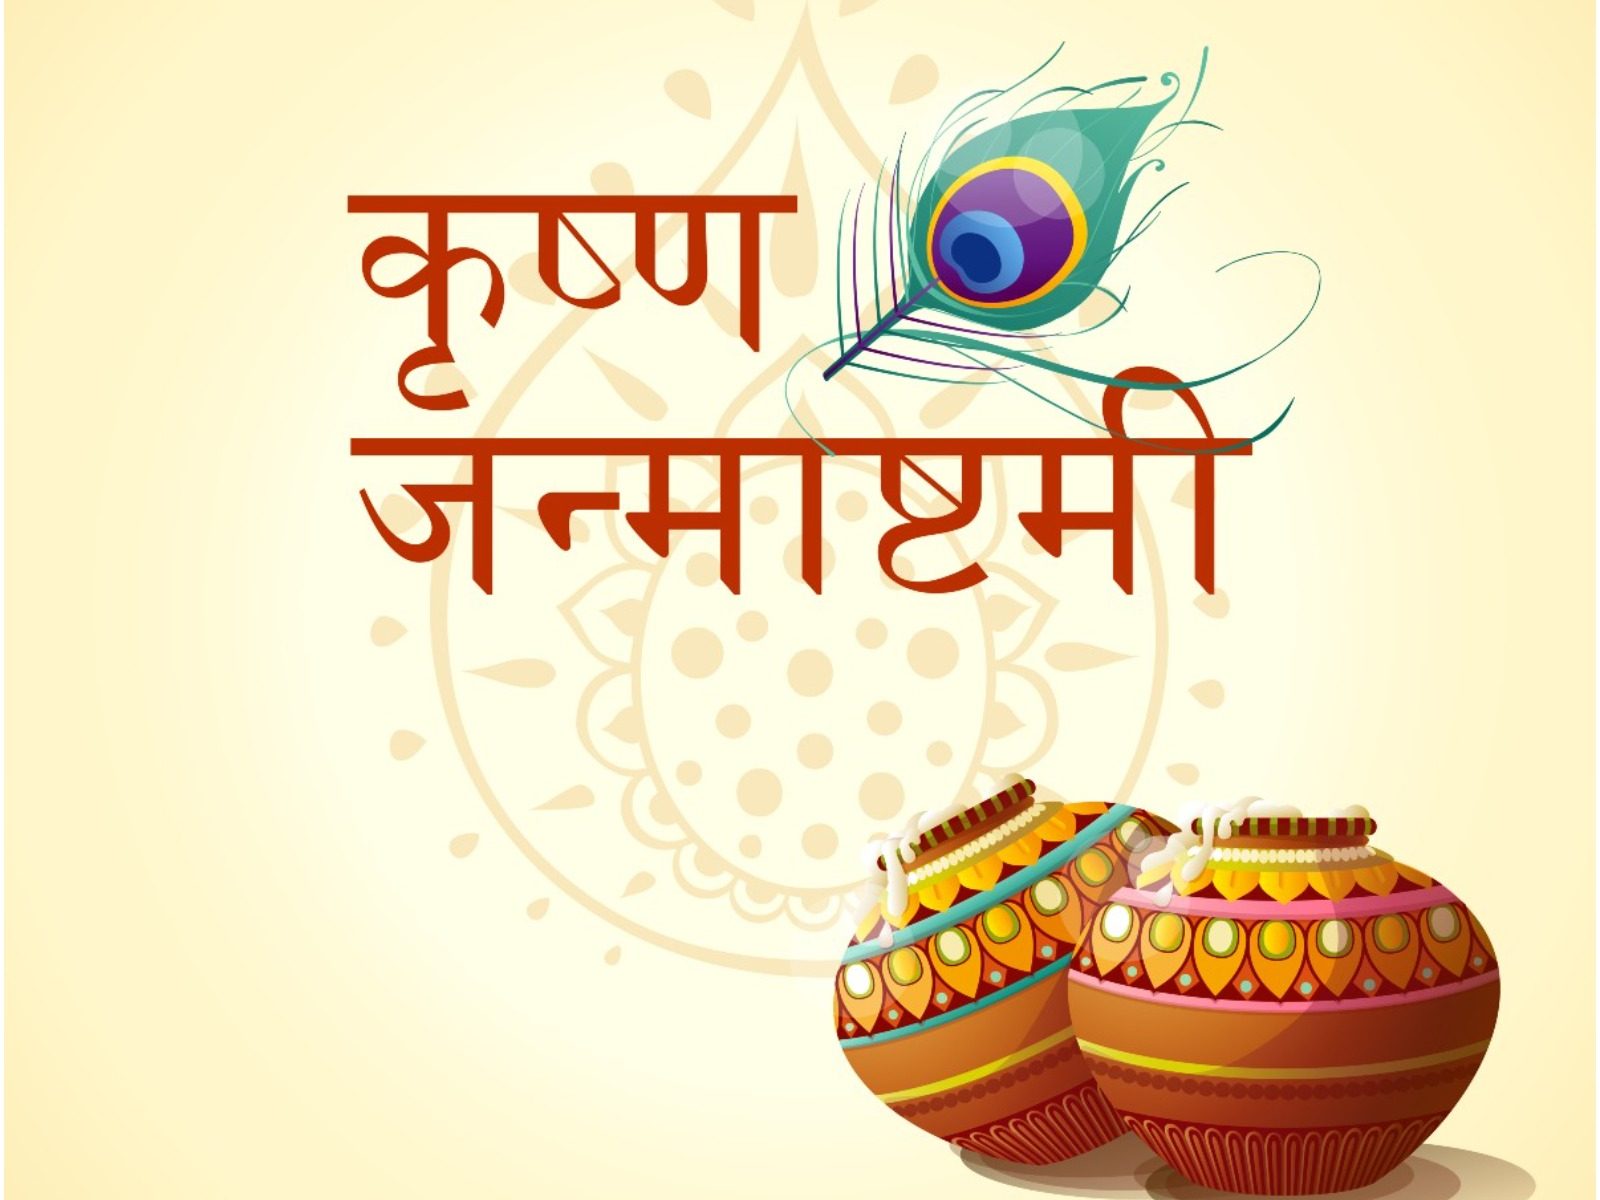 Krishna janmashtami logo Vectors & Illustrations for Free Download | Freepik